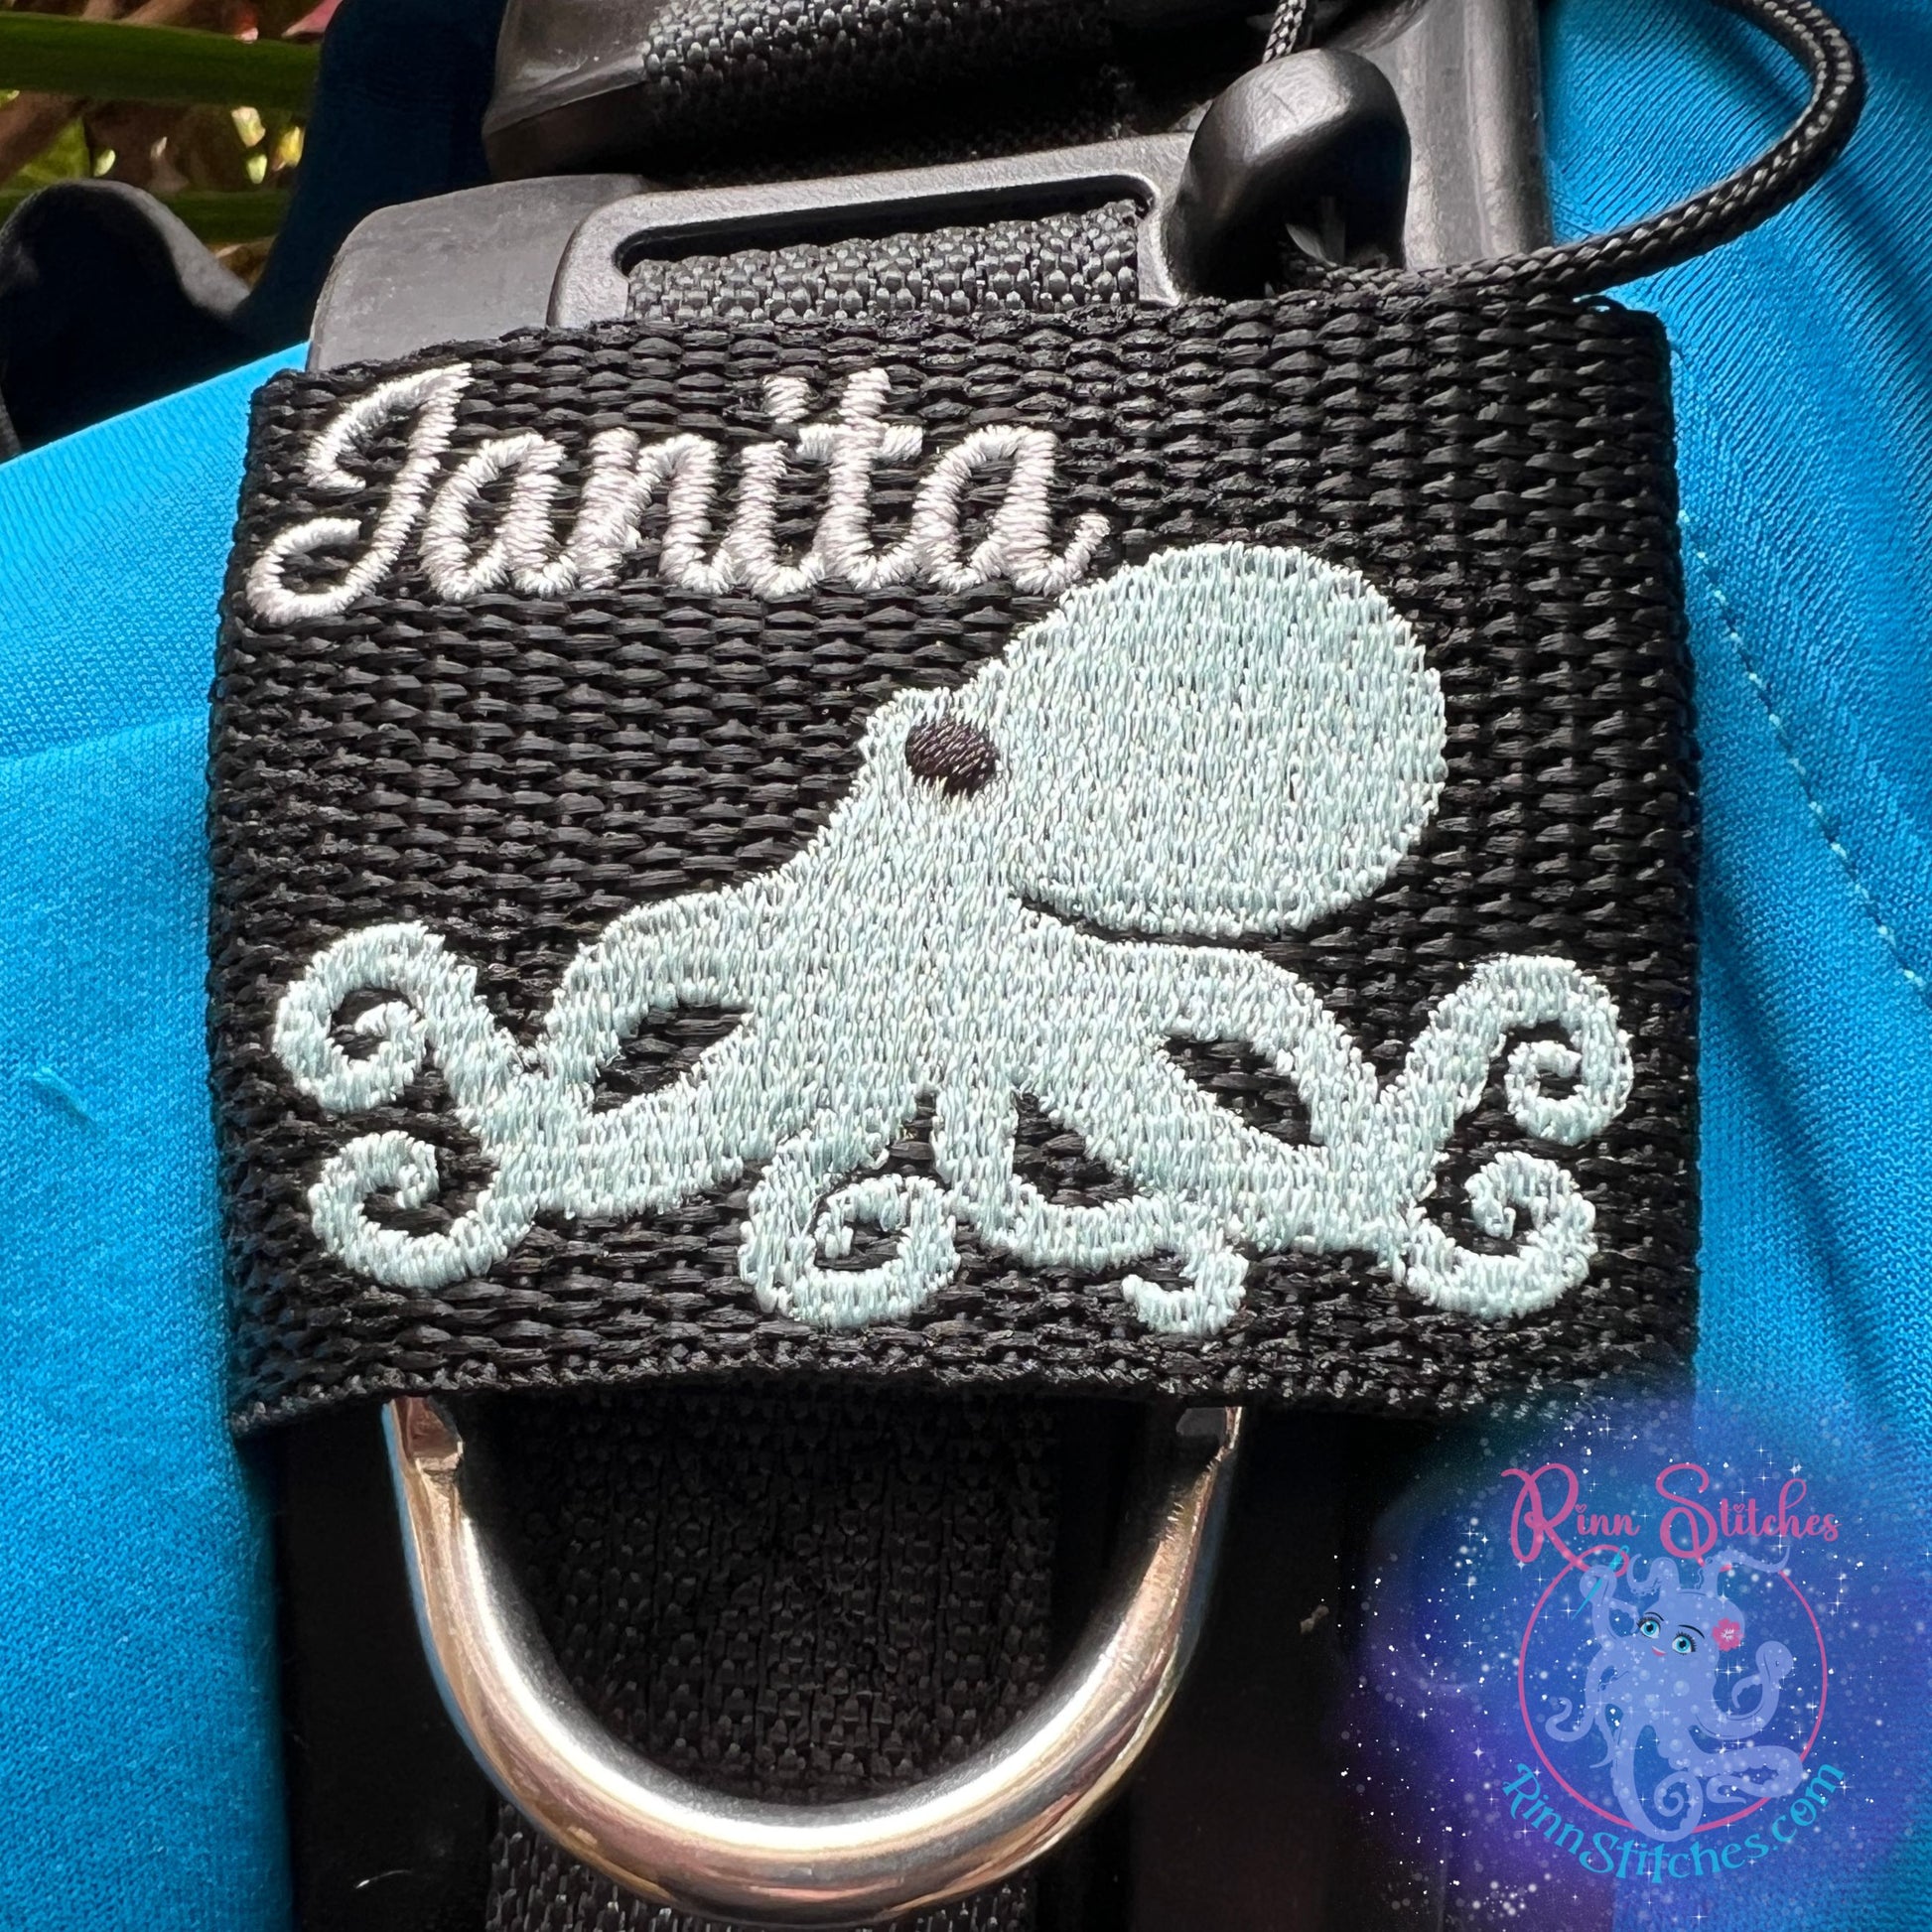 Tako (Octopus) | Personalized & Customizable Scuba Diver BCD Identification Tag | Made on Maui | Scuba Diver Gift | Rinn Stitches Creative & Unique Embroidery - Small Jacket Size - Scuba Pro Hydros - Zeagle Zena